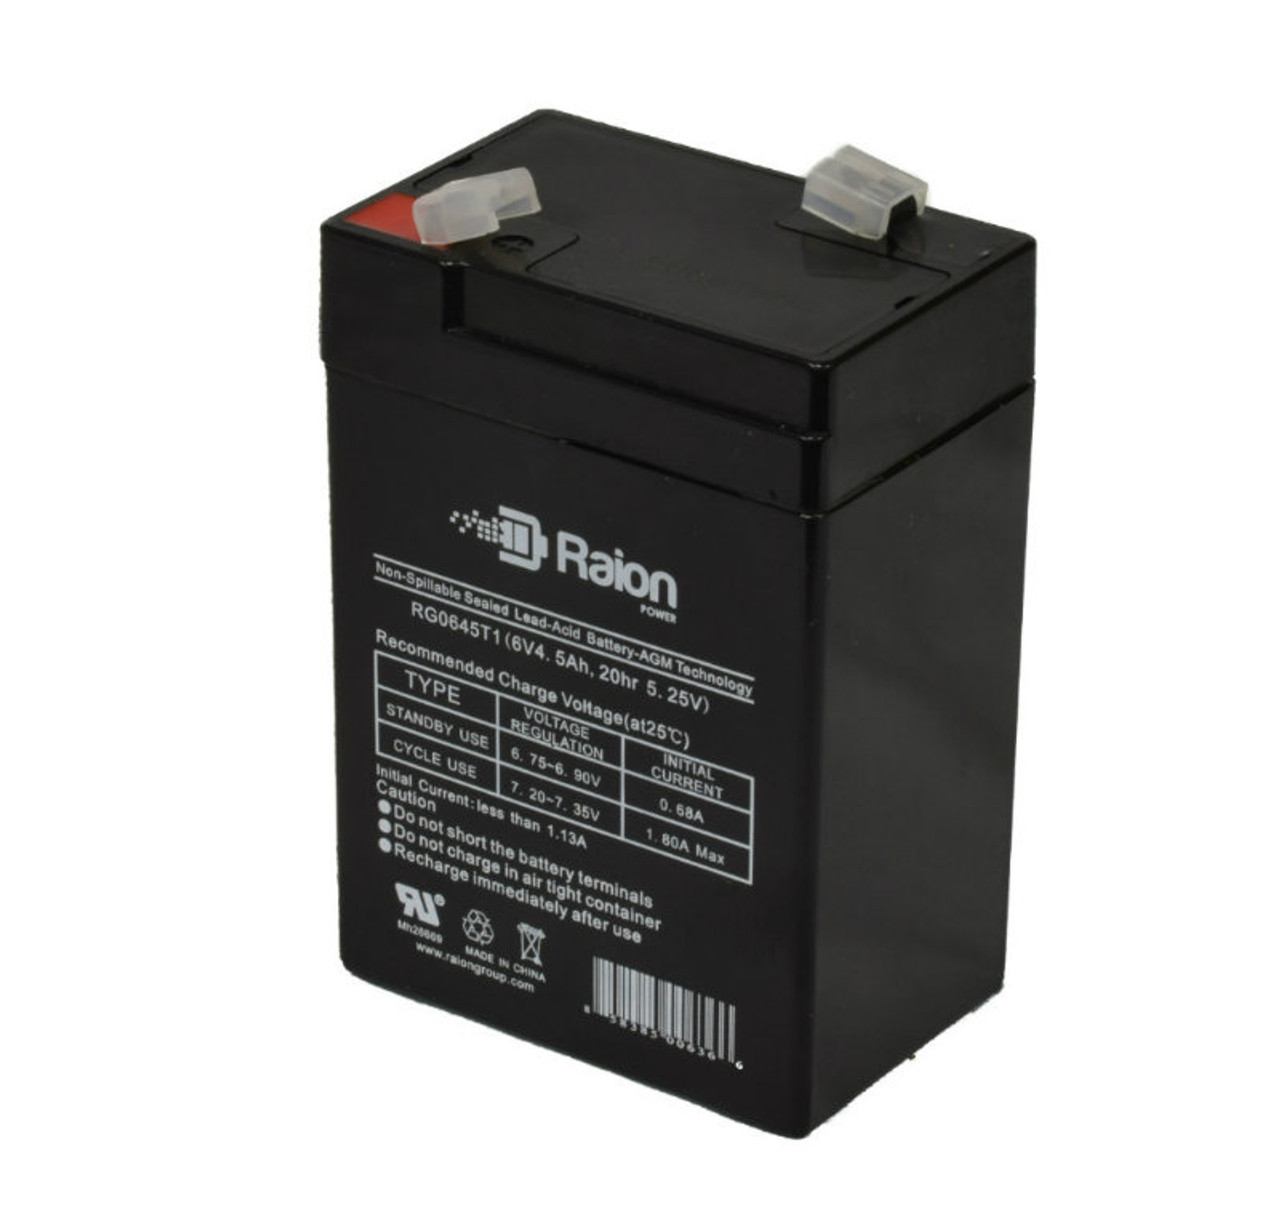 Raion Power RG0645T1 6V 4.5Ah Replacement Battery Cartridge for SBB 3FM4.5